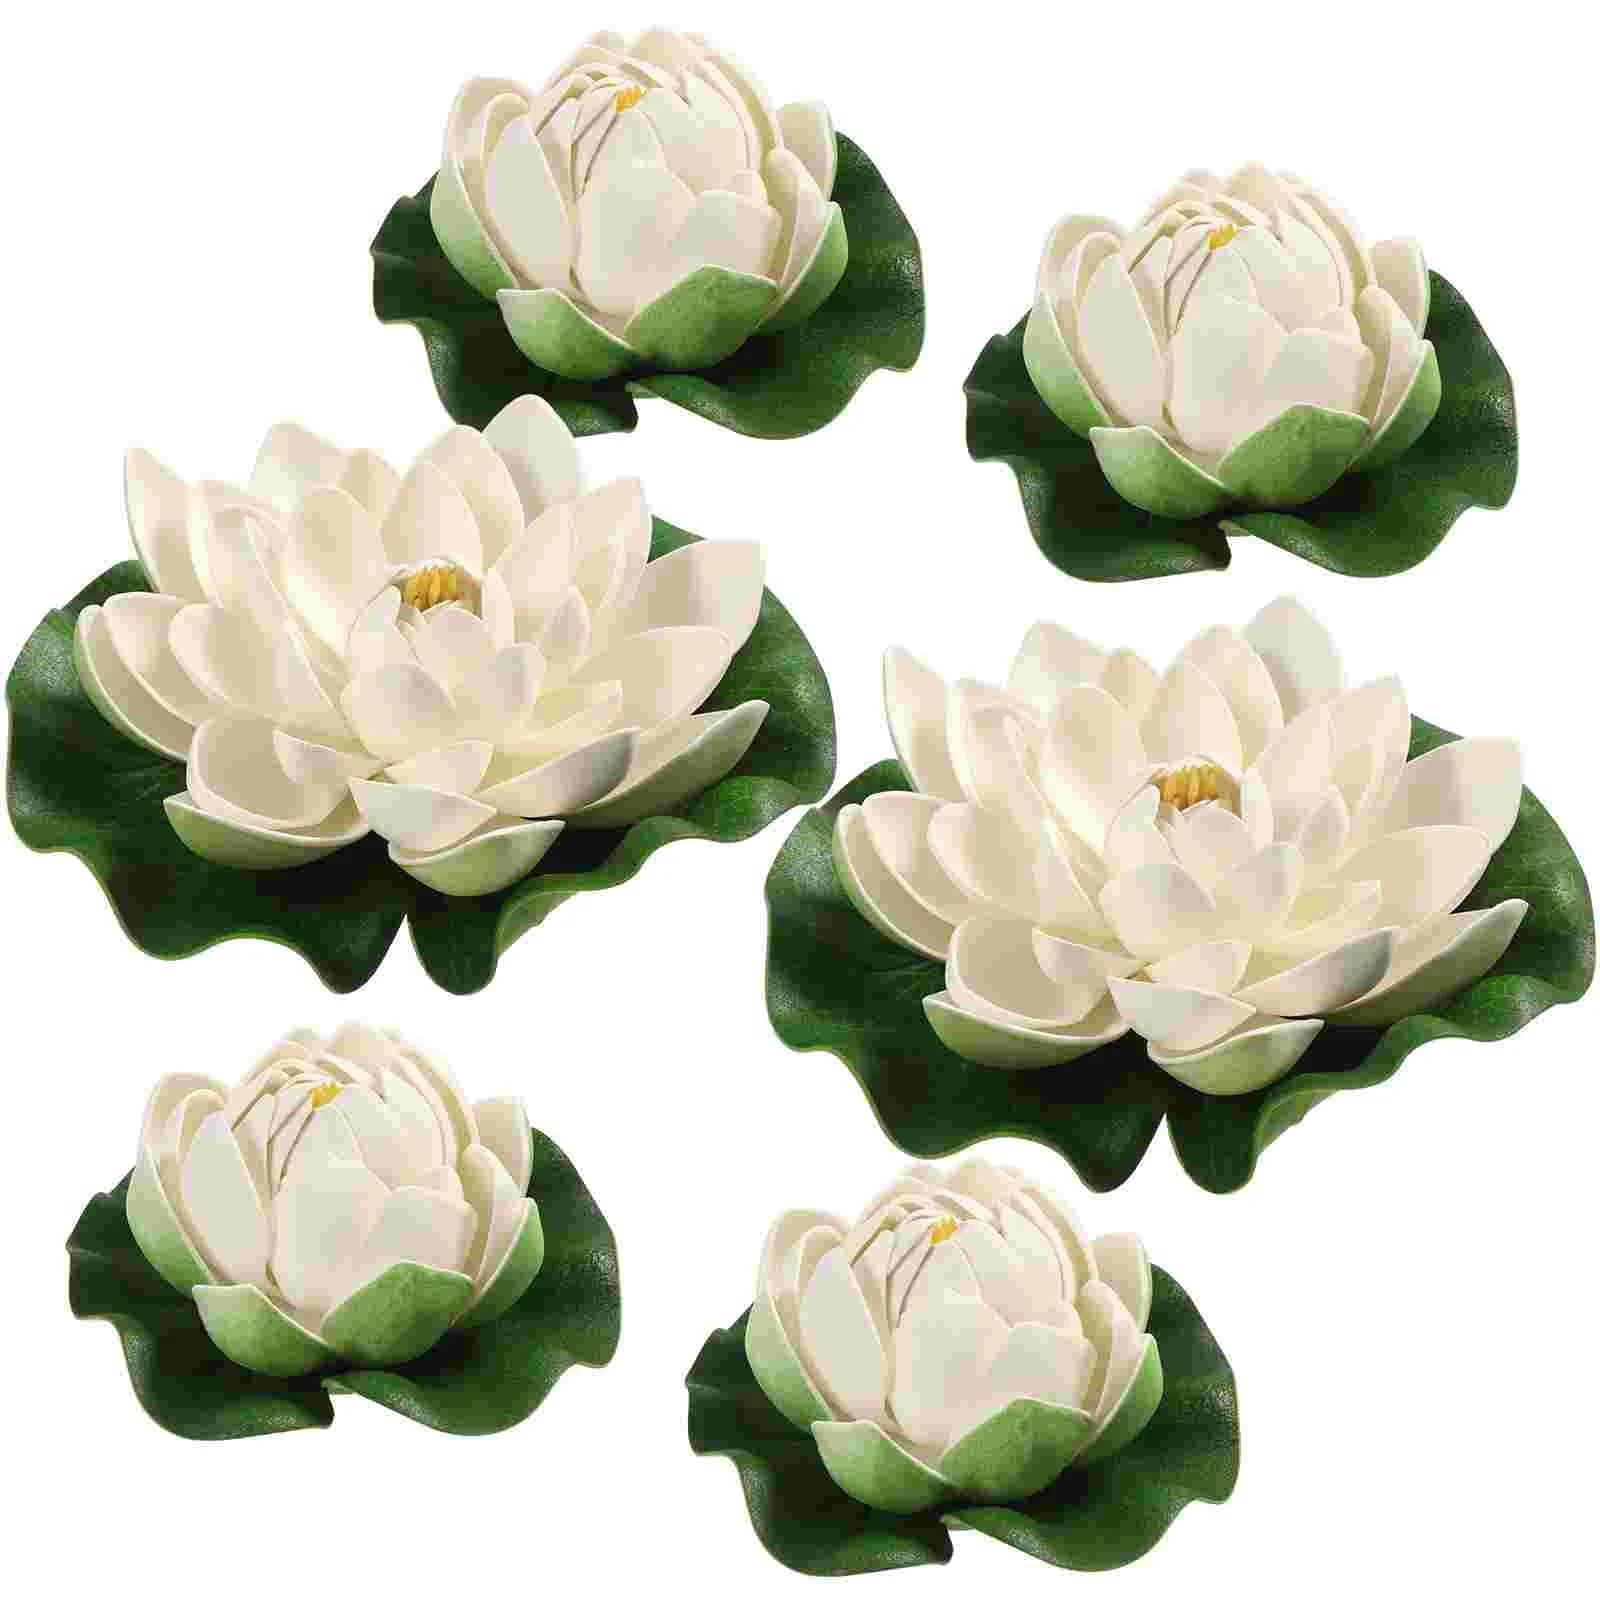 

WINOMO 6pcs Artificial Pond Plants Lotus Simulation Floating Flower Pond Fish Tank Decor Ornaments White